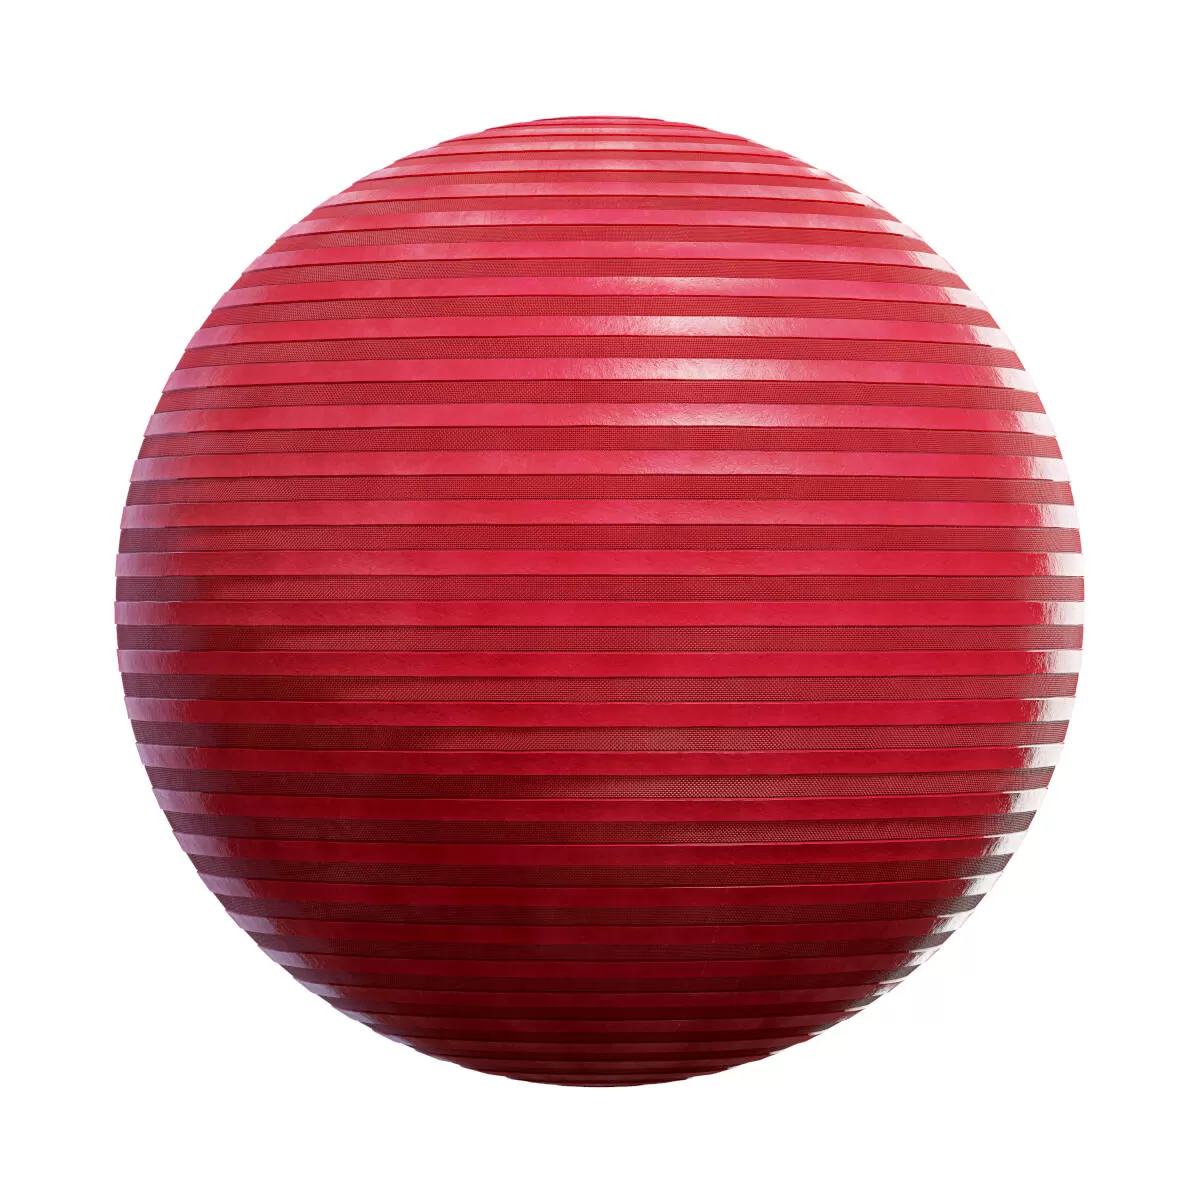 PBR Textures Volume 44 – Plastic – 4K – 8K – red_patterned_plastic_41_49